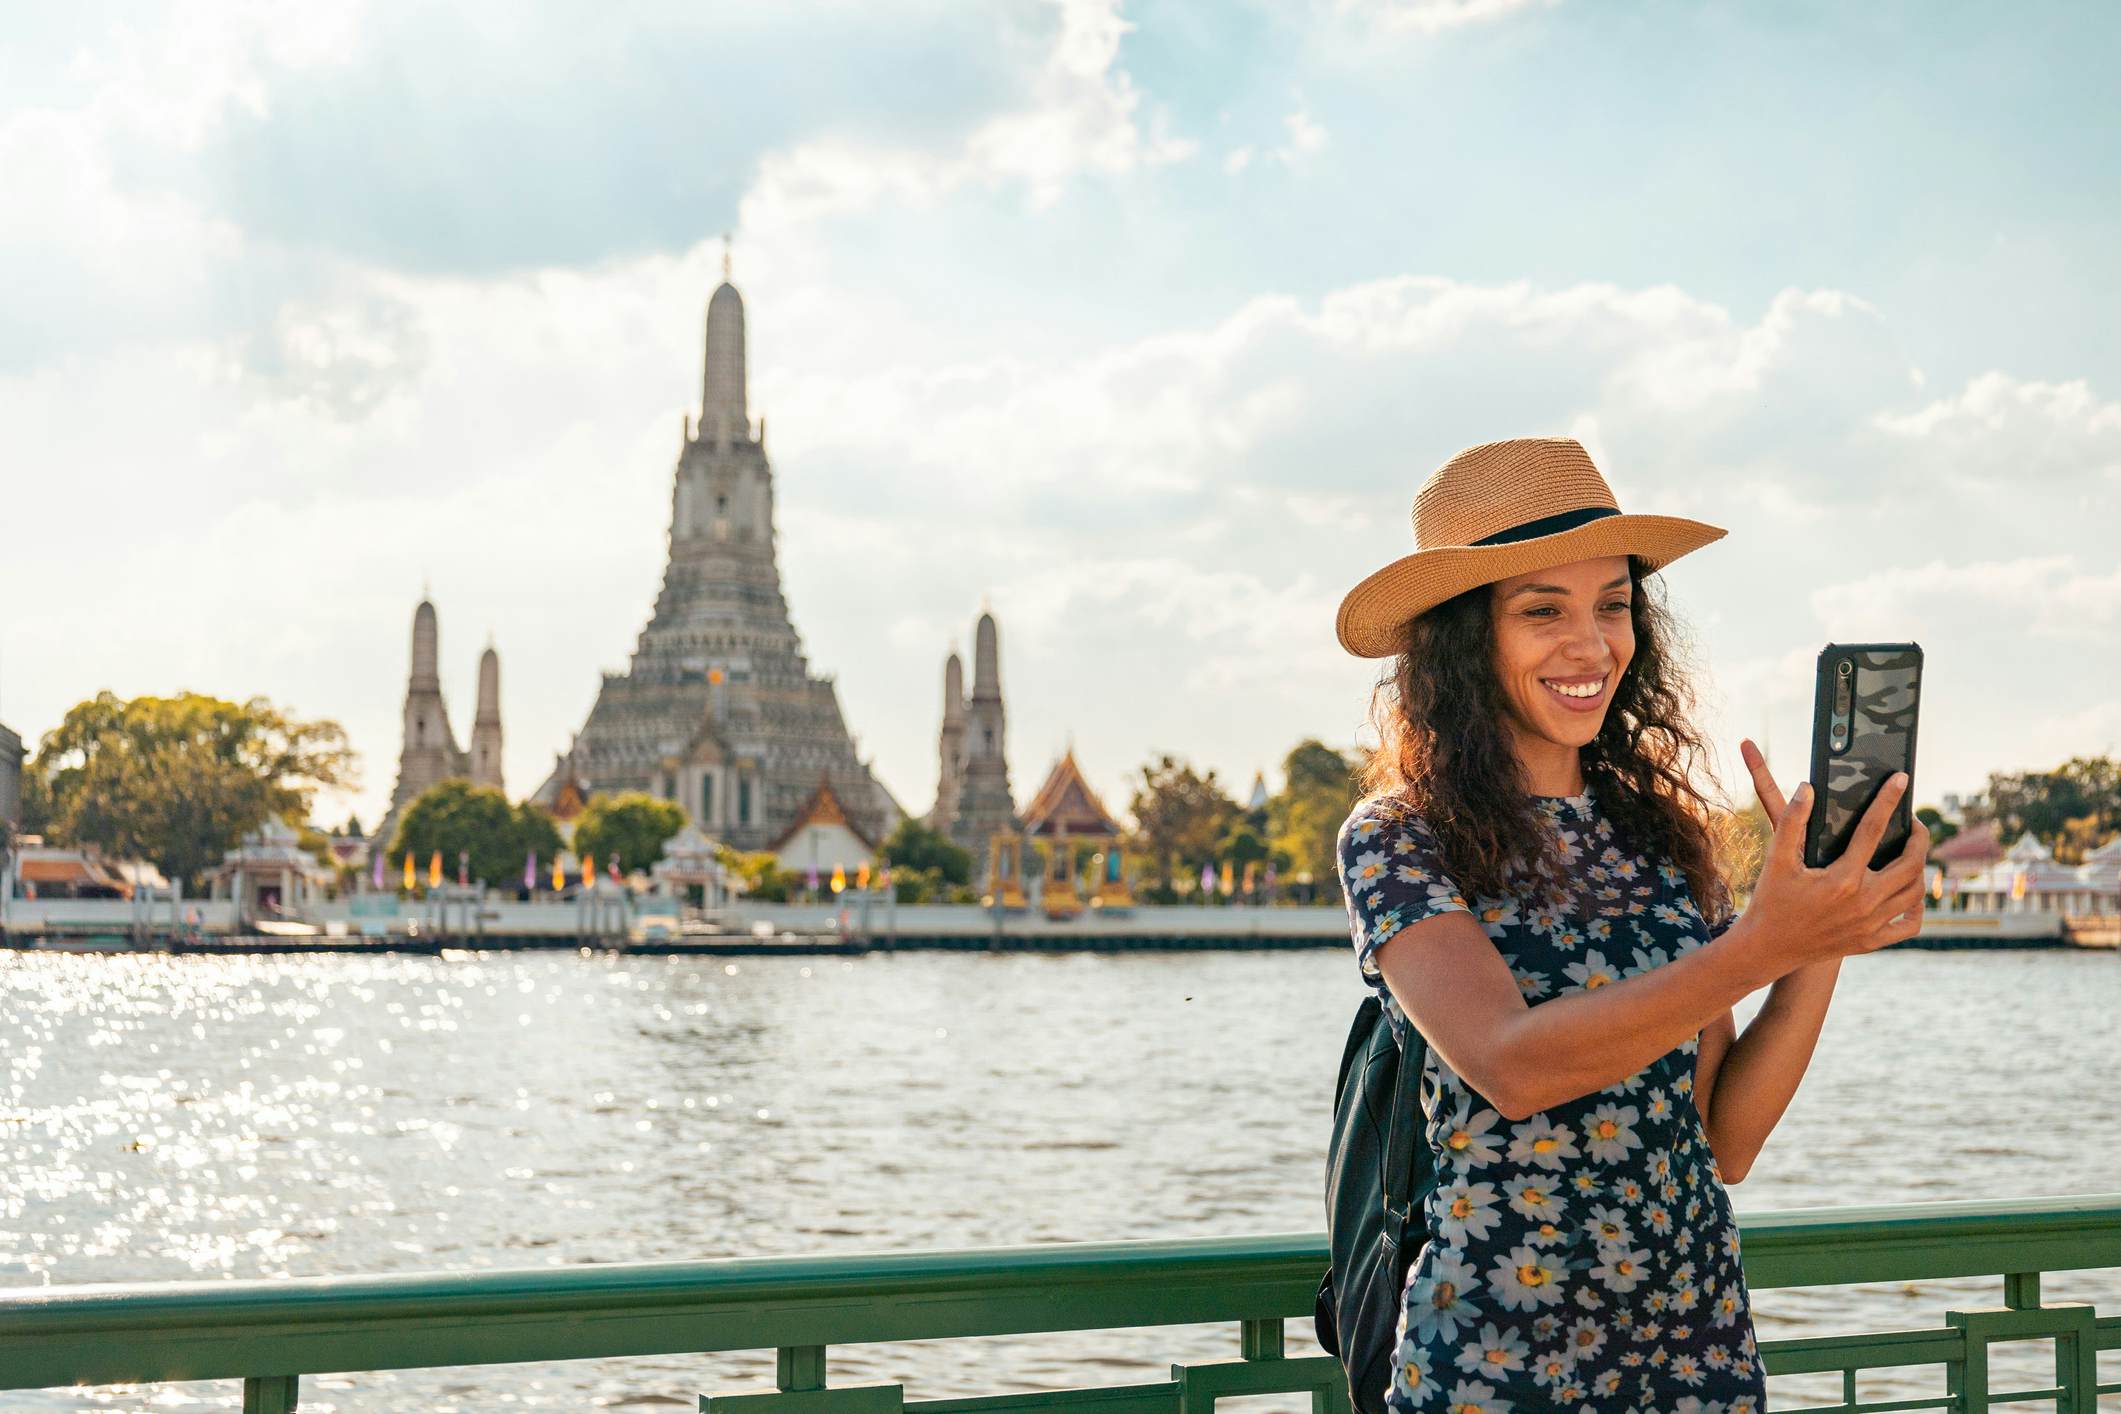 Bangkok Travel Guide - Things To Do & Vacation Ideas